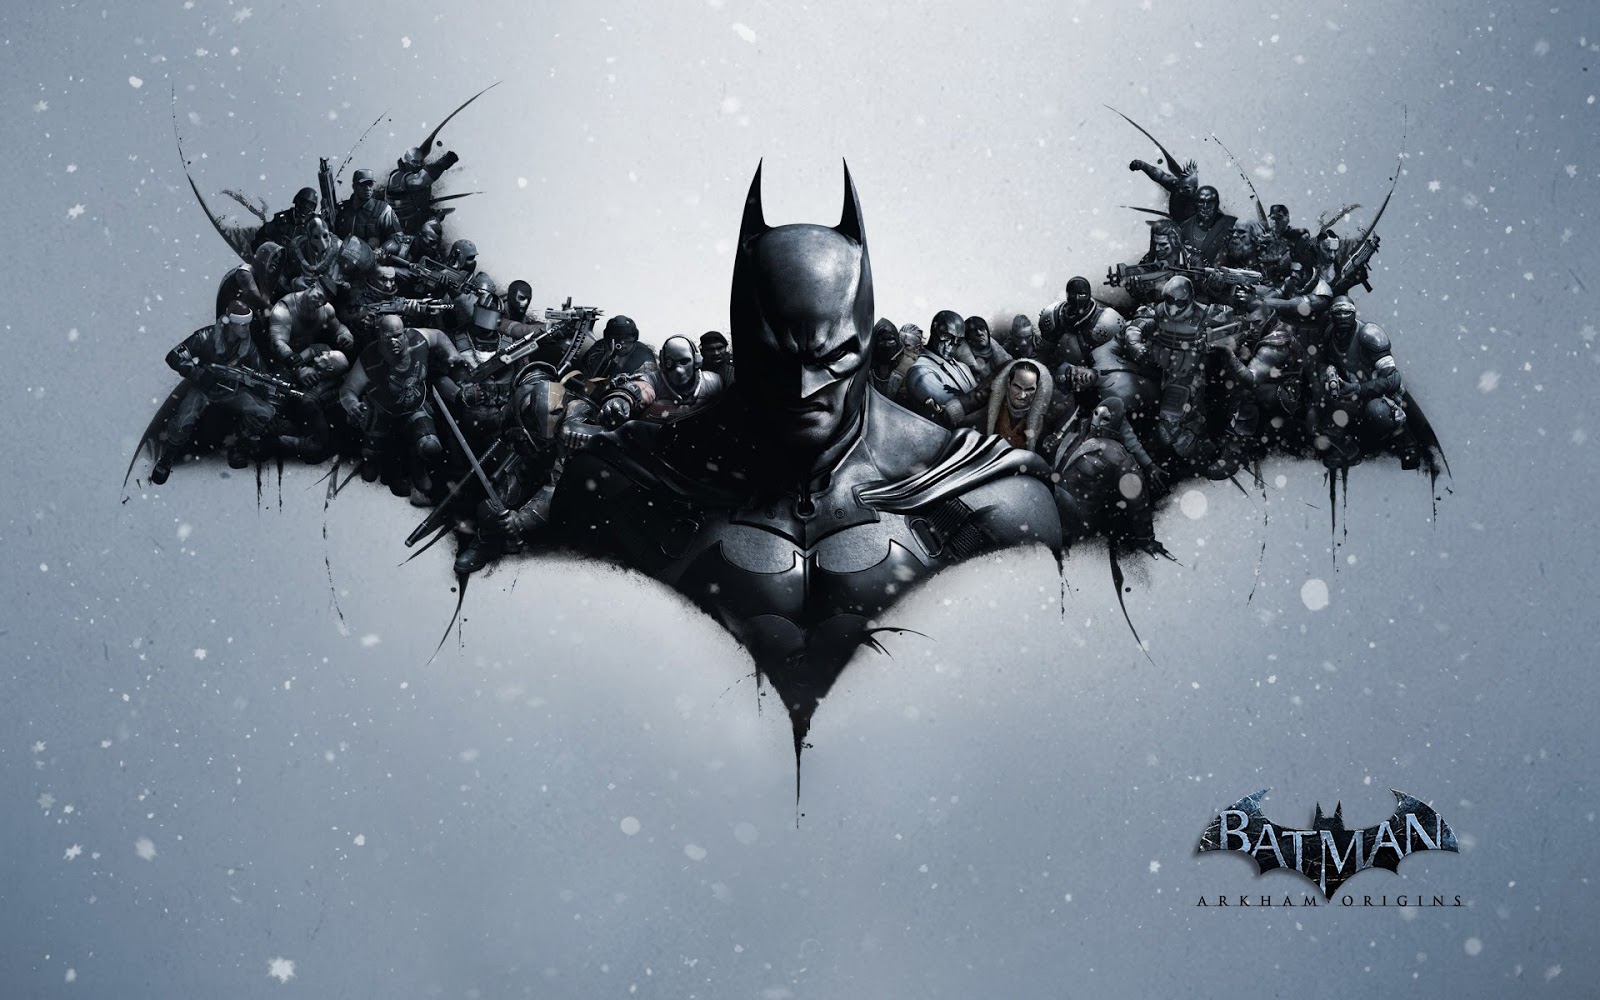 Batman Arkham Origins Requirements - The Cryd's Daily